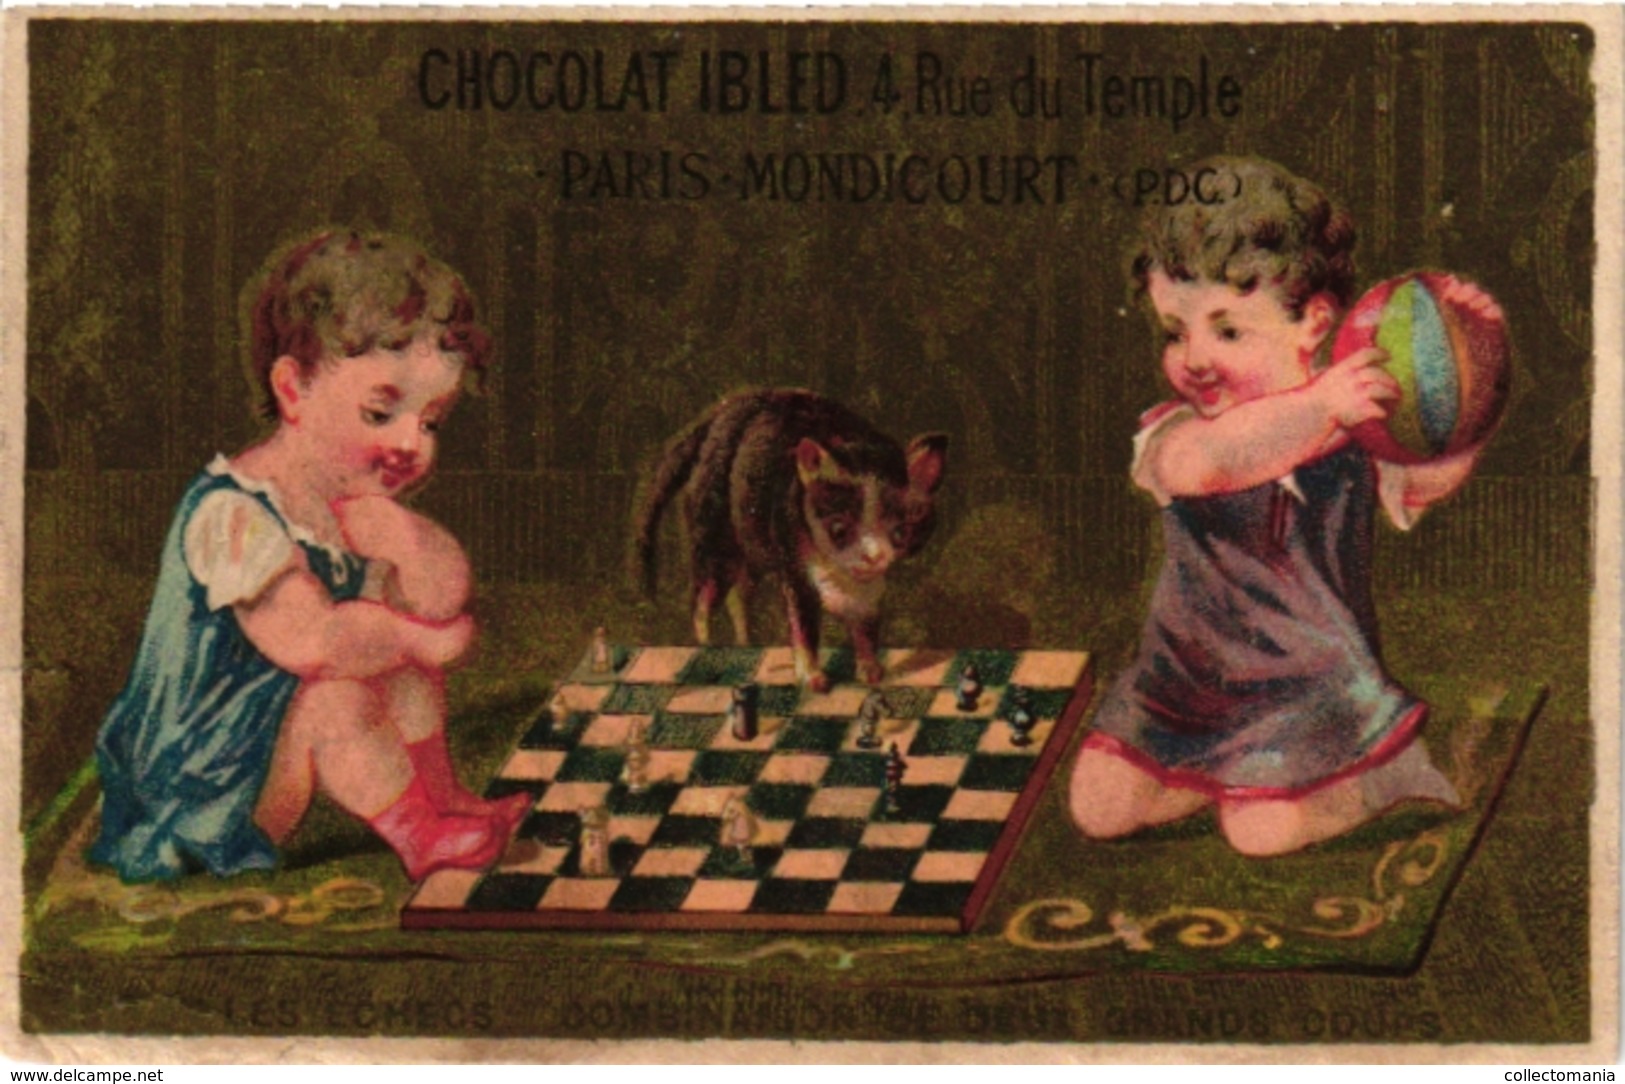 1 Trade Cards Chromo CHESS ECHEC SCHACH  Pub Chocolat  IBLED Mondicourt - Schach